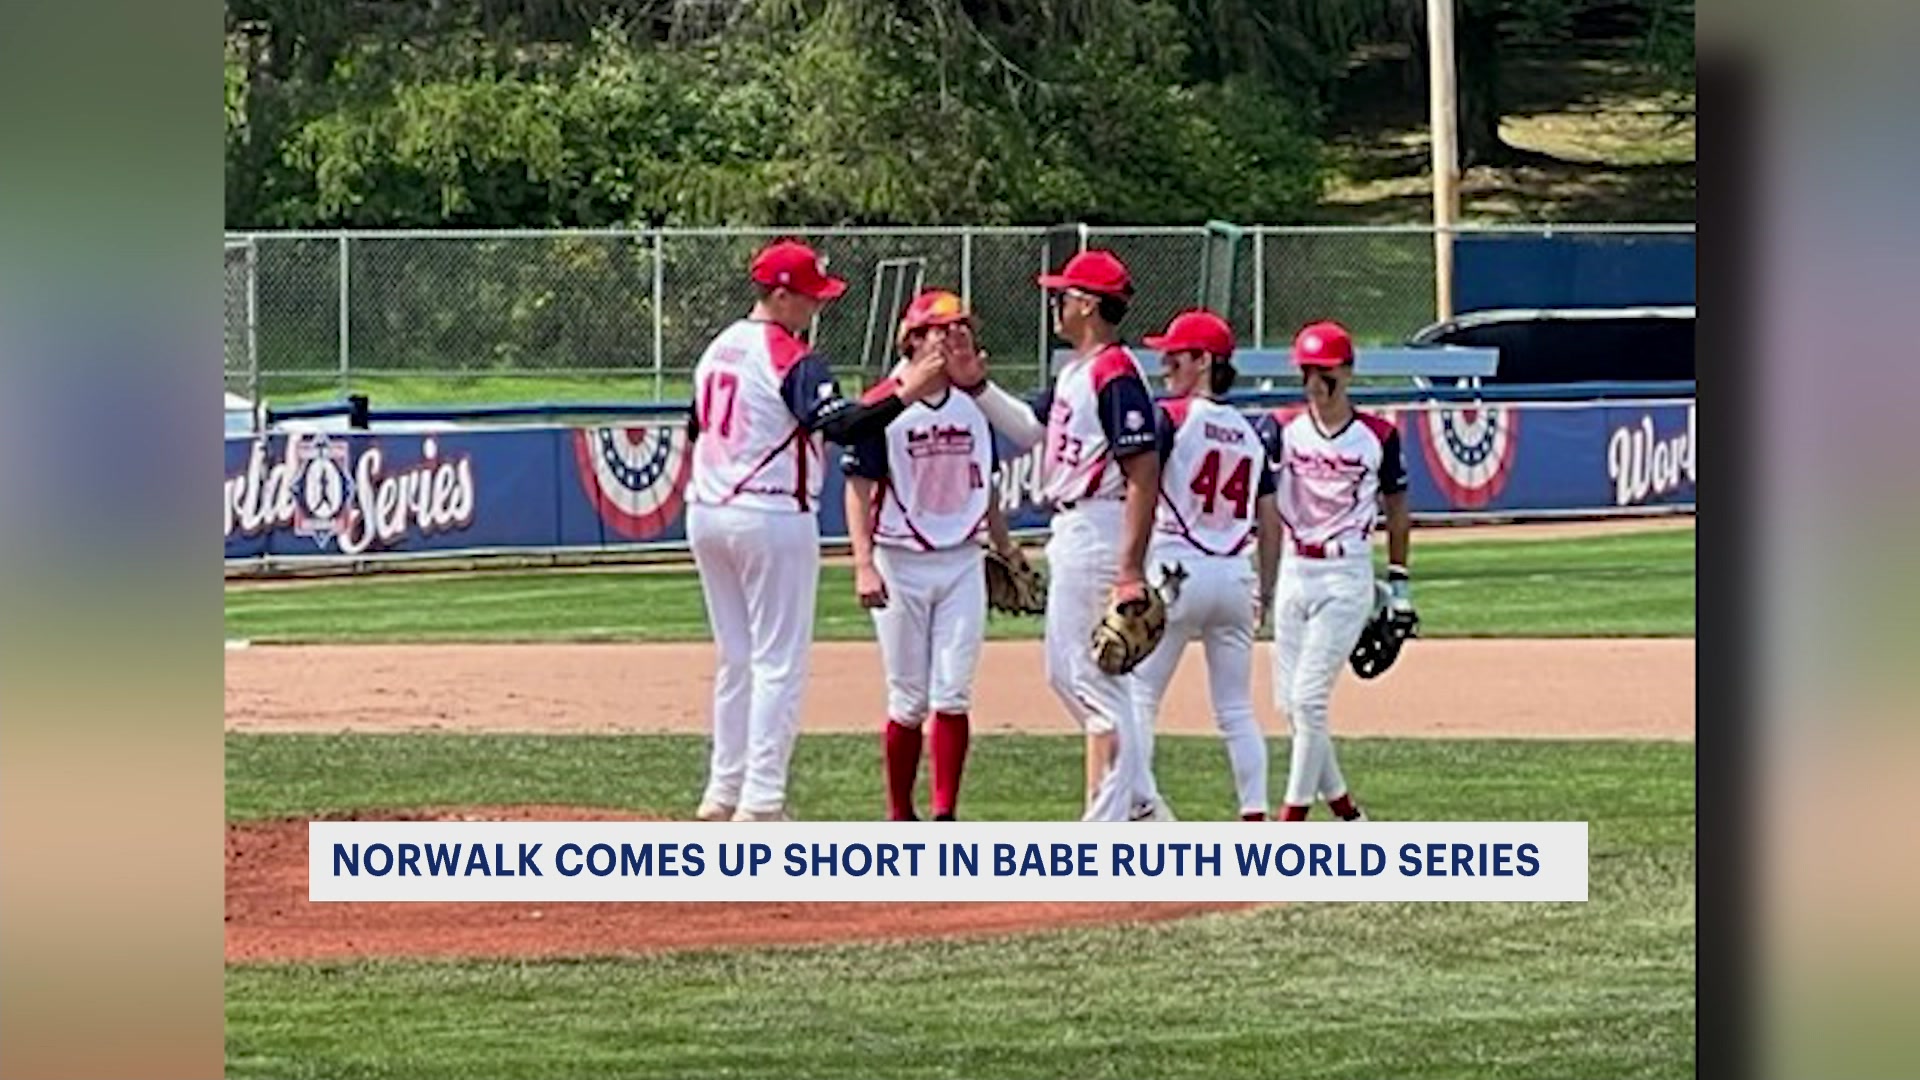 Norwalks Babe Ruth World Series championship bid comes to an end